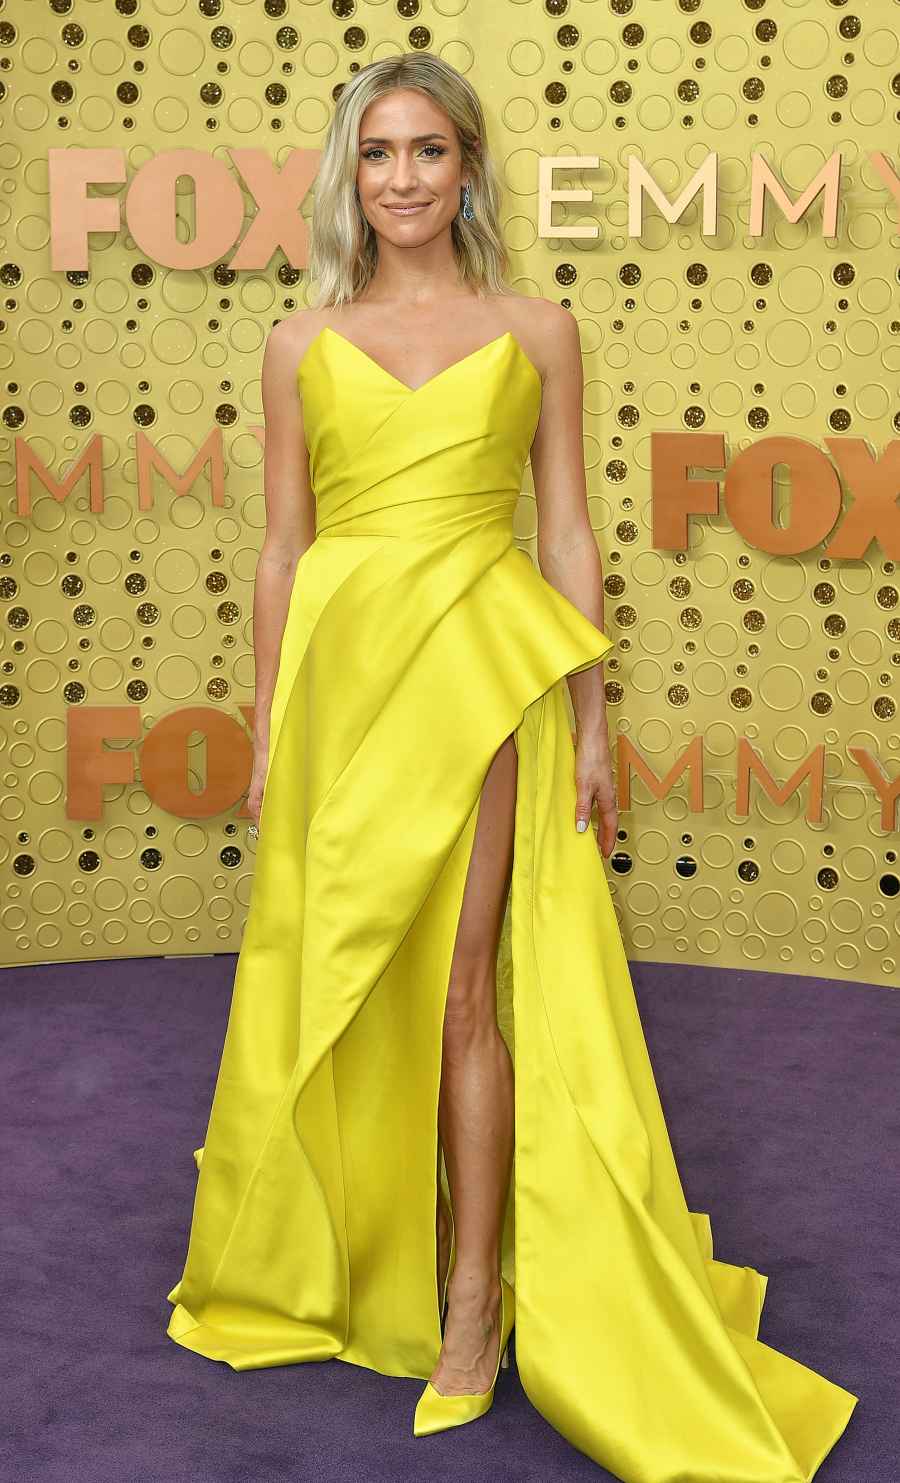 Emmys 2019 - Kristin Cavallari